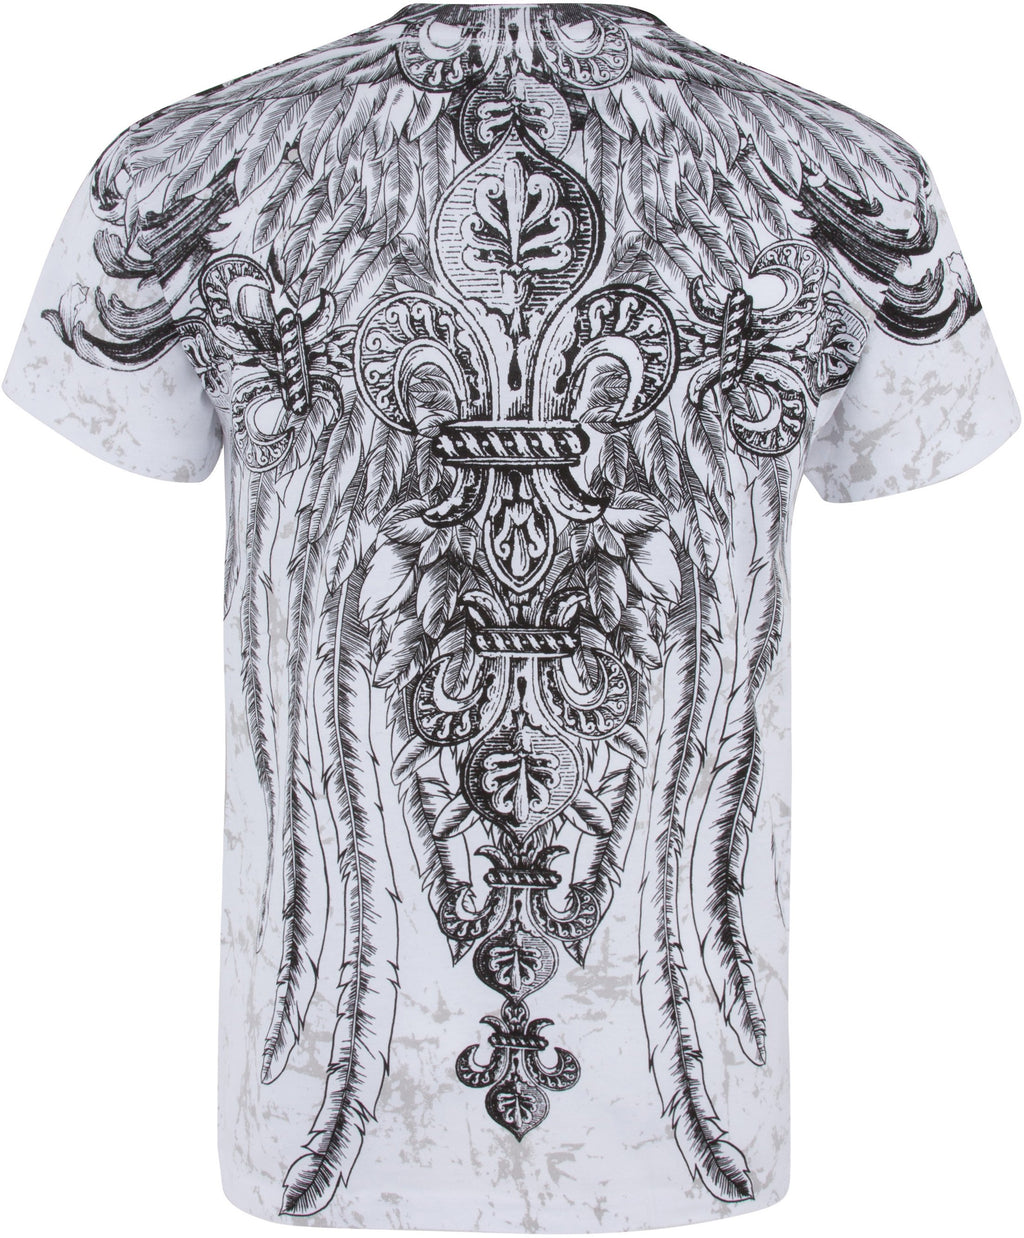 Men's Silver Metallic Embossed Fleur De Lis Cross Cotton Fashion T-shi